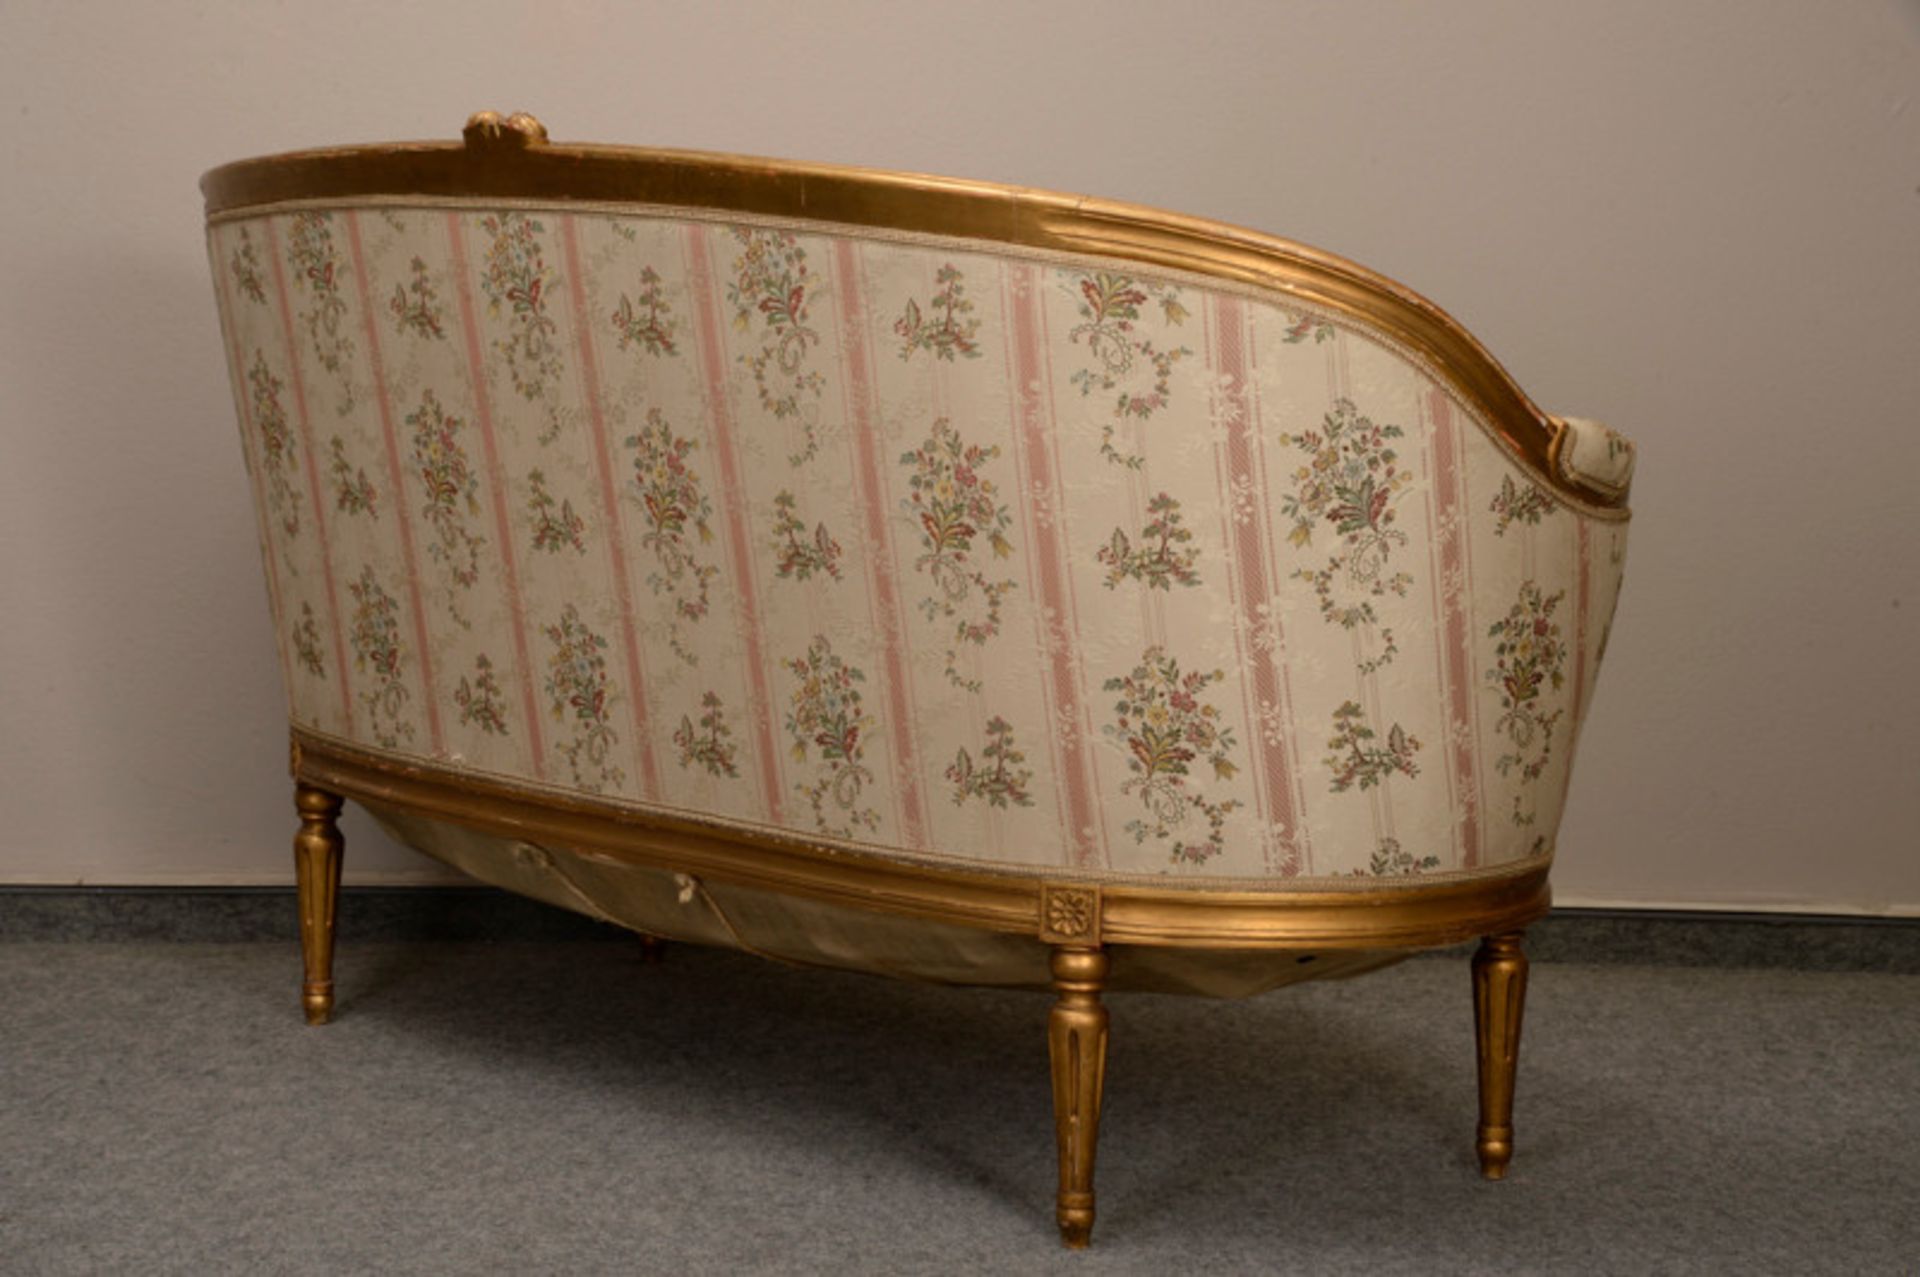 Salonsofa im Rokokostil, 2. H. 19. Jhd.alte Goldfassung, beige/rosefarben gestreifter Seidenbezug - Bild 2 aus 2